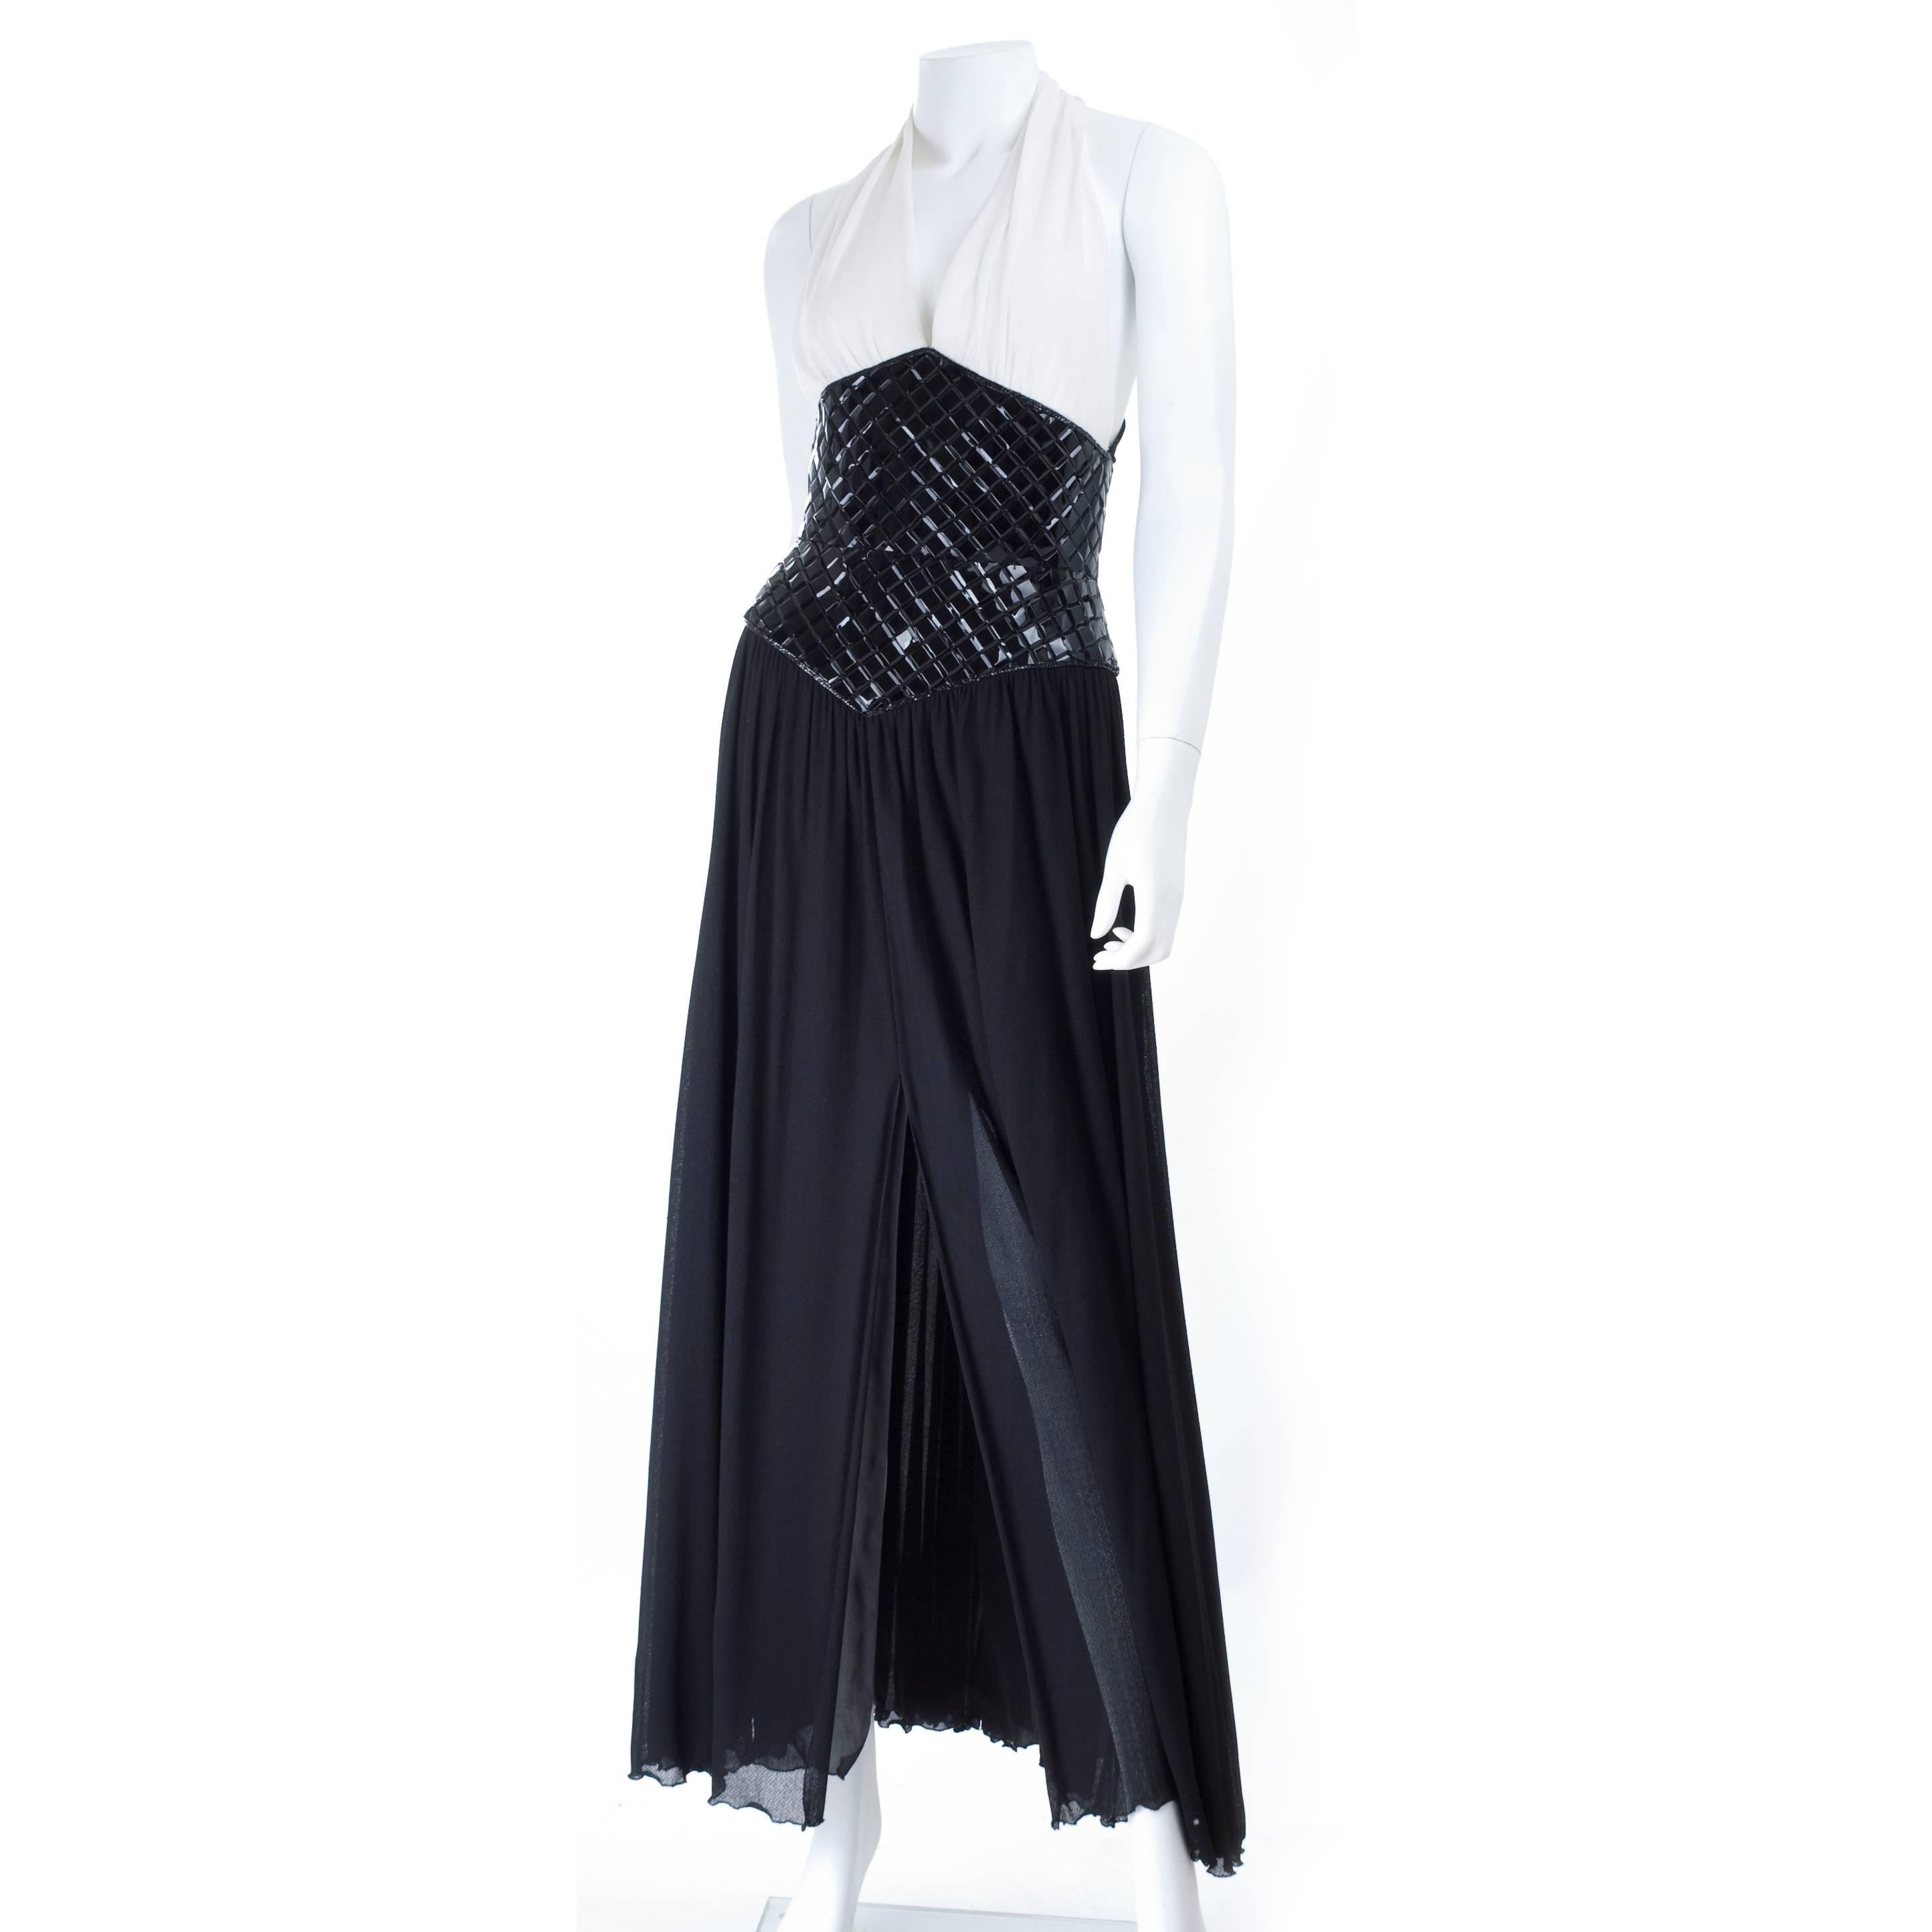 1995 Vintage Chanel Evening Dress Black & White Documented For Sale 1